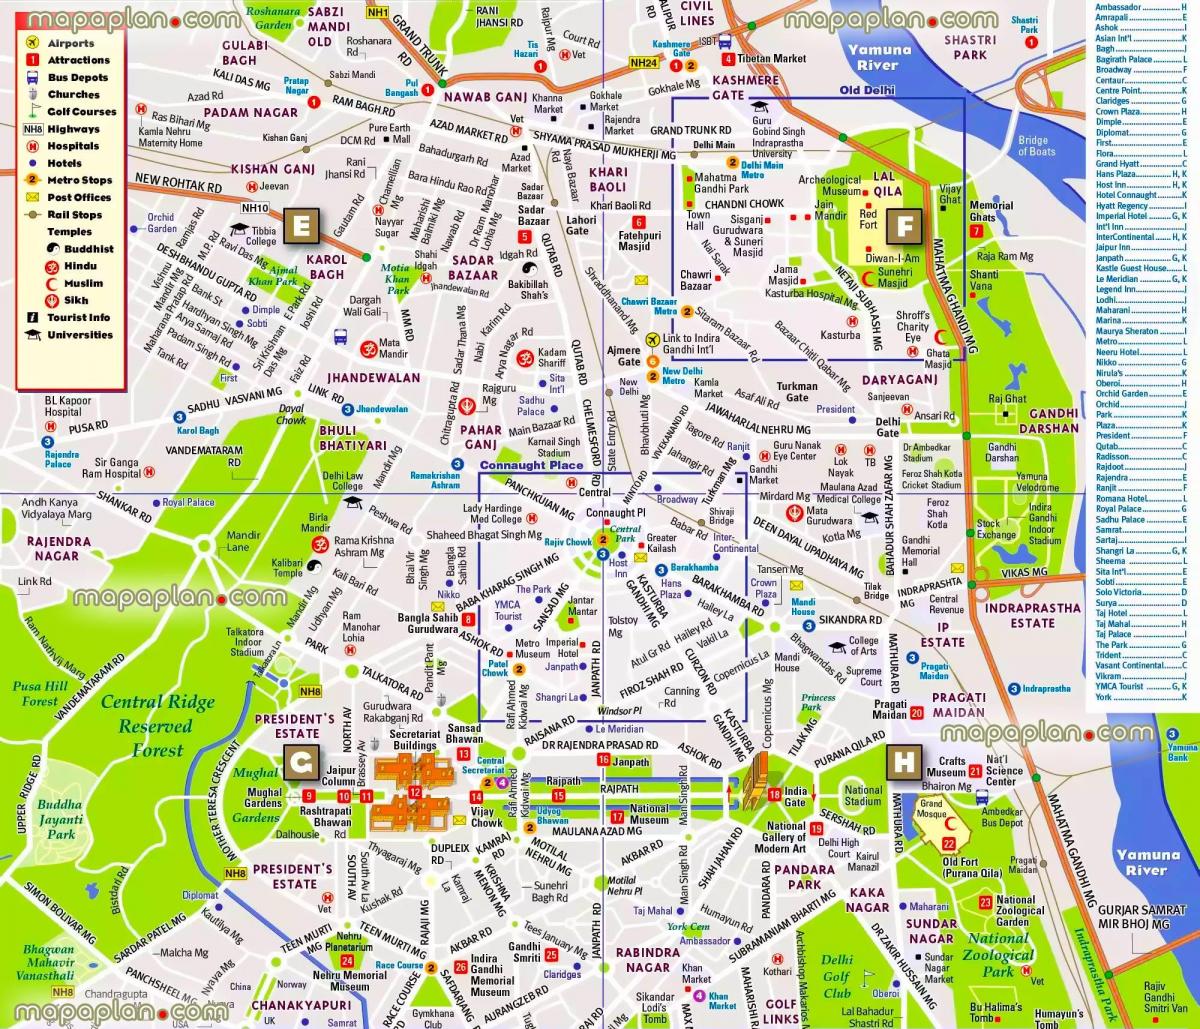 New Delhi city center map